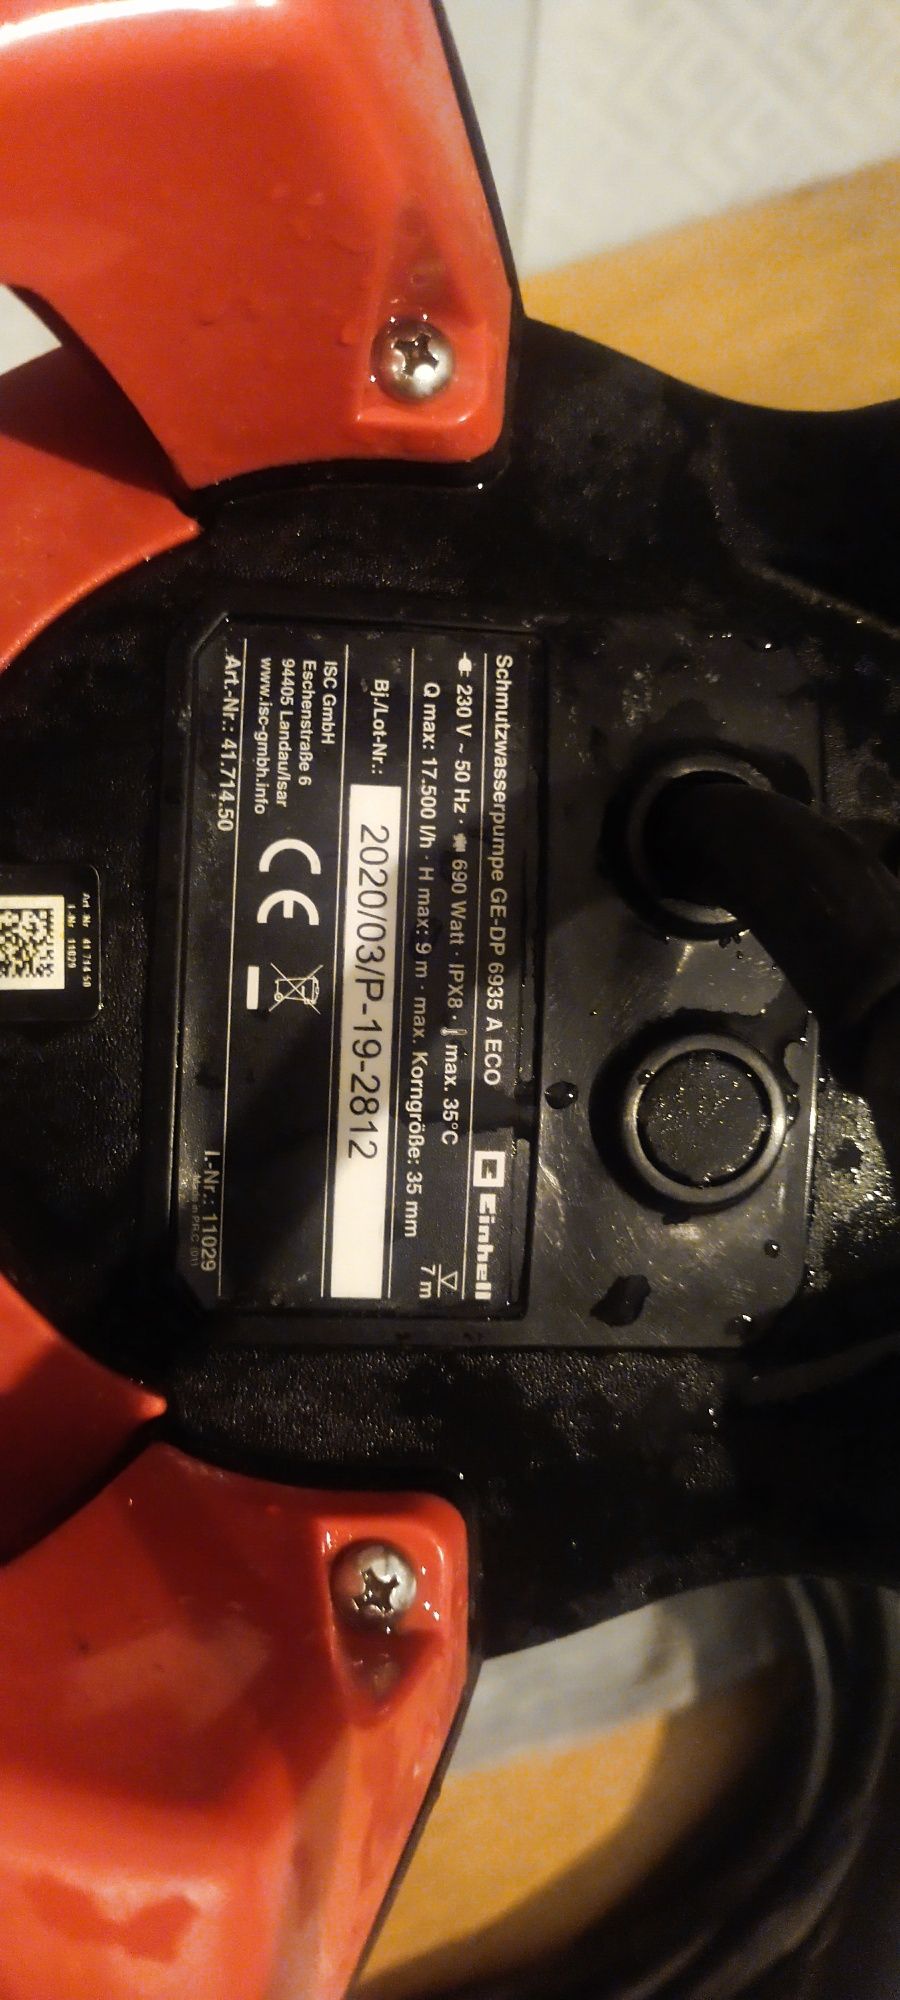 Pompa zatapialna wody brudnej  einhell 17500 l/h 230V 690W